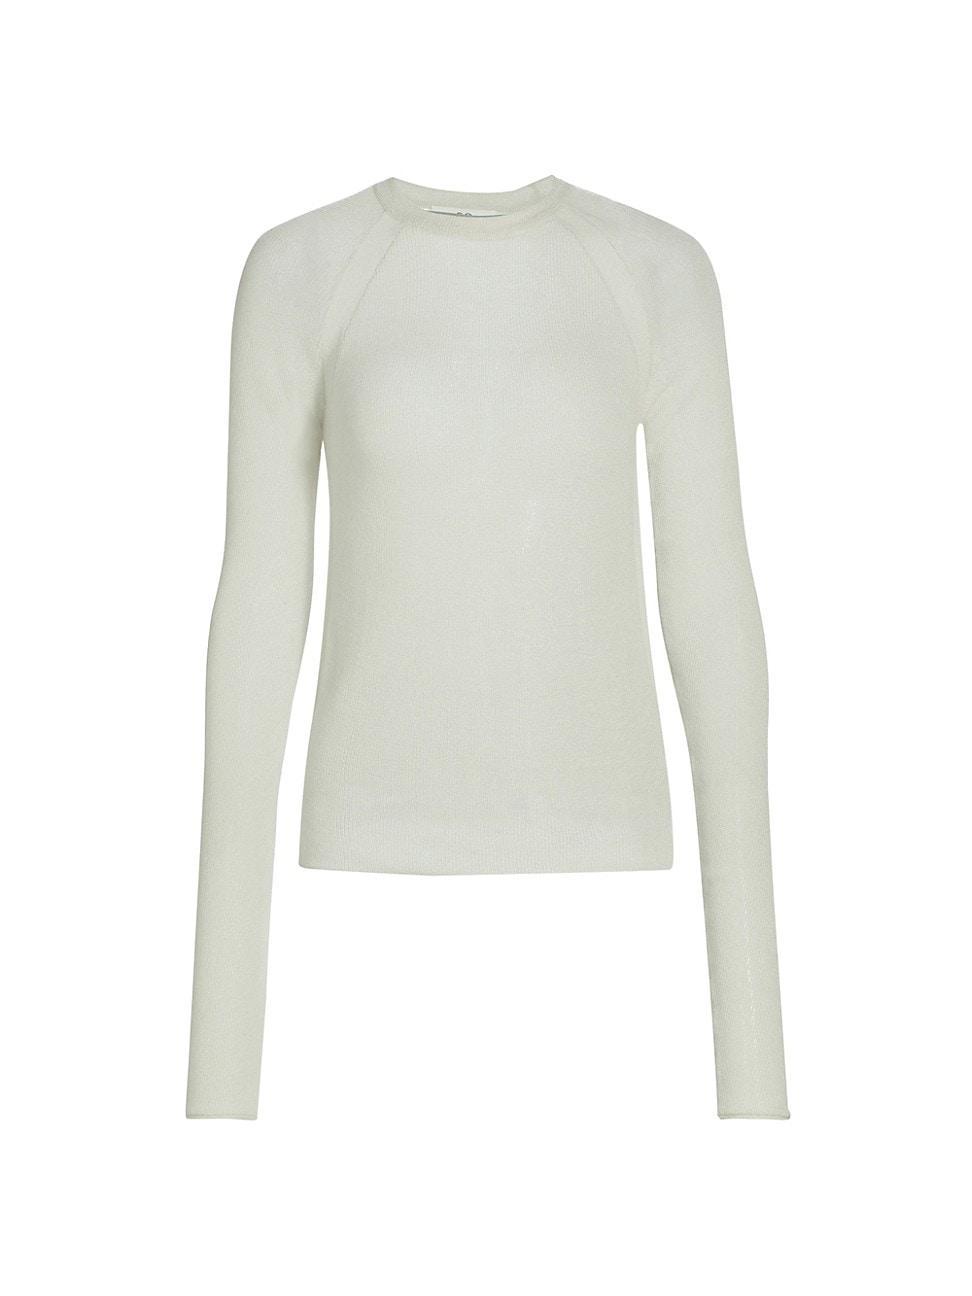 Womens Cashmere Raglan-Sleeve Sweater Product Image